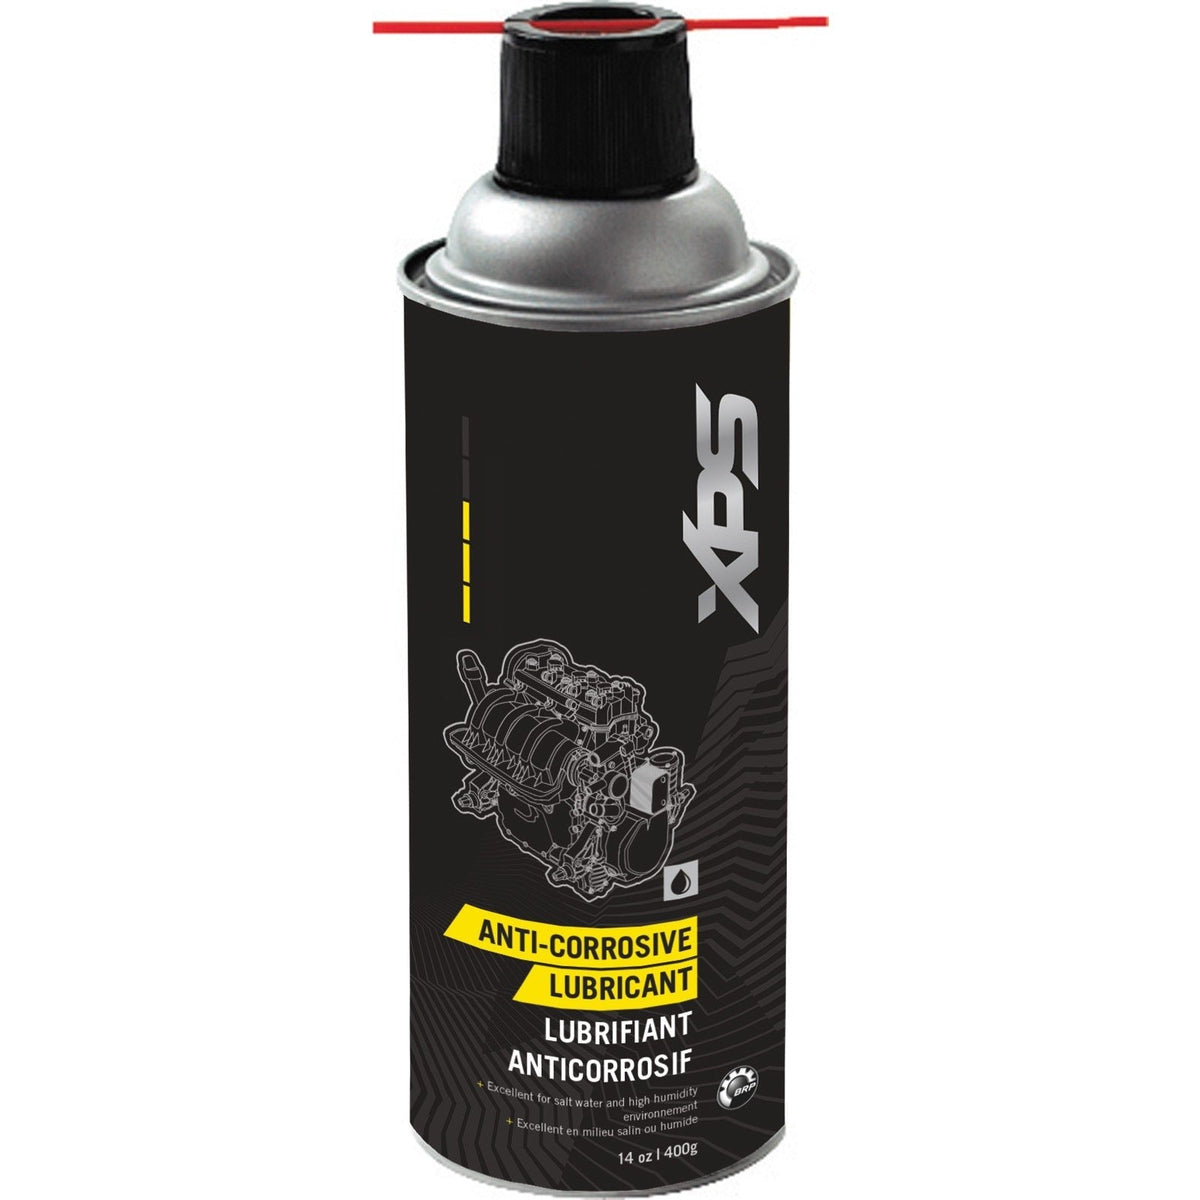 XPS Anti-Corrosive Lubricant